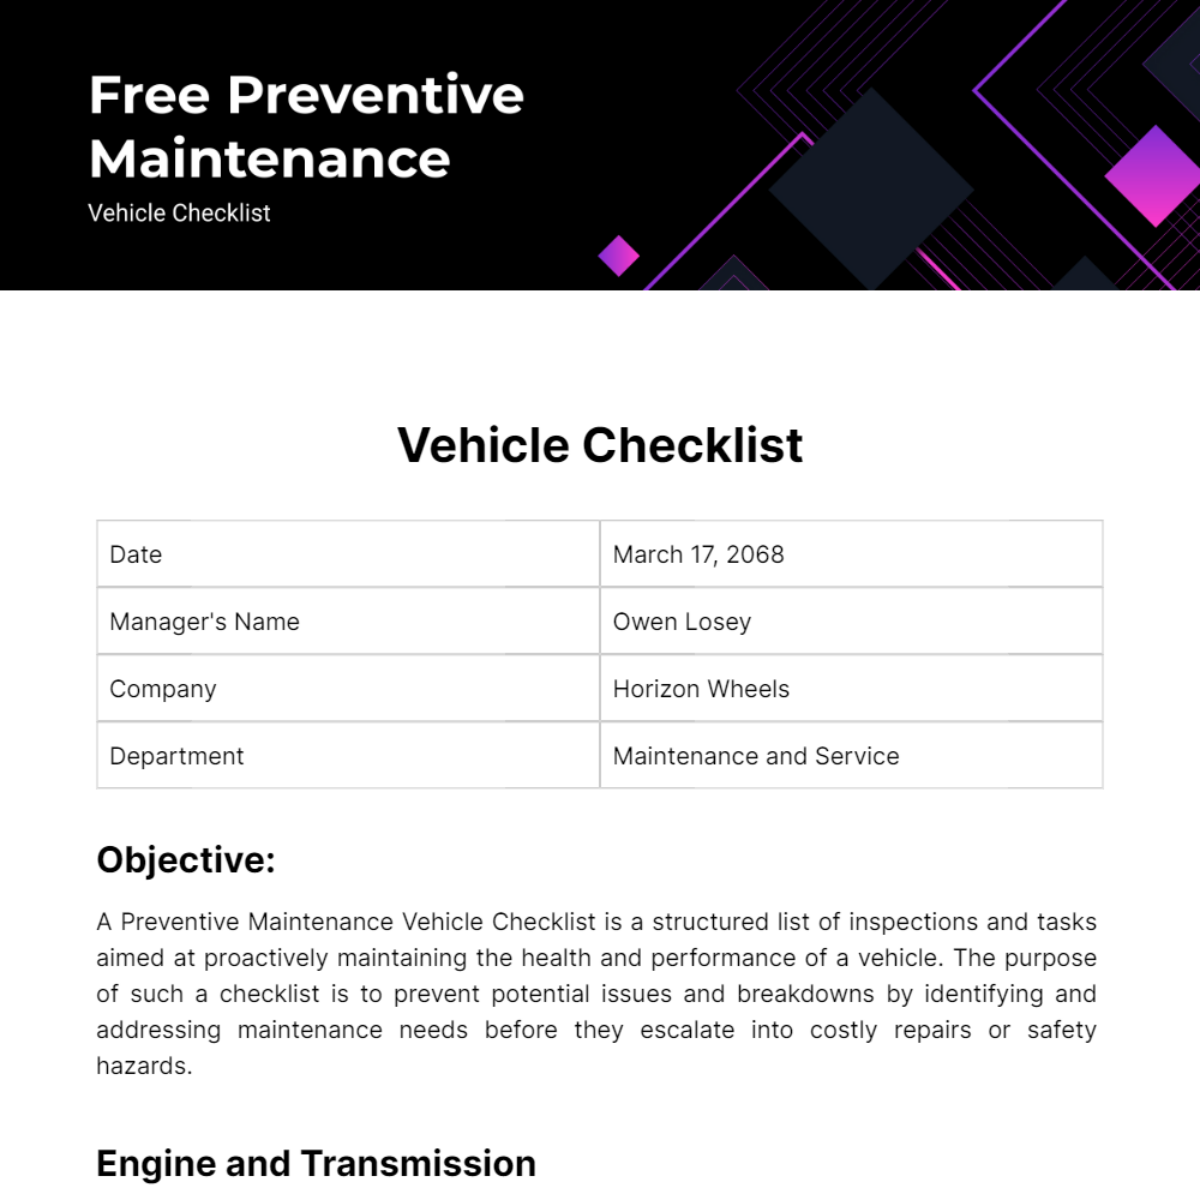 Free Preventive Maintenance Vehicle Checklist Template